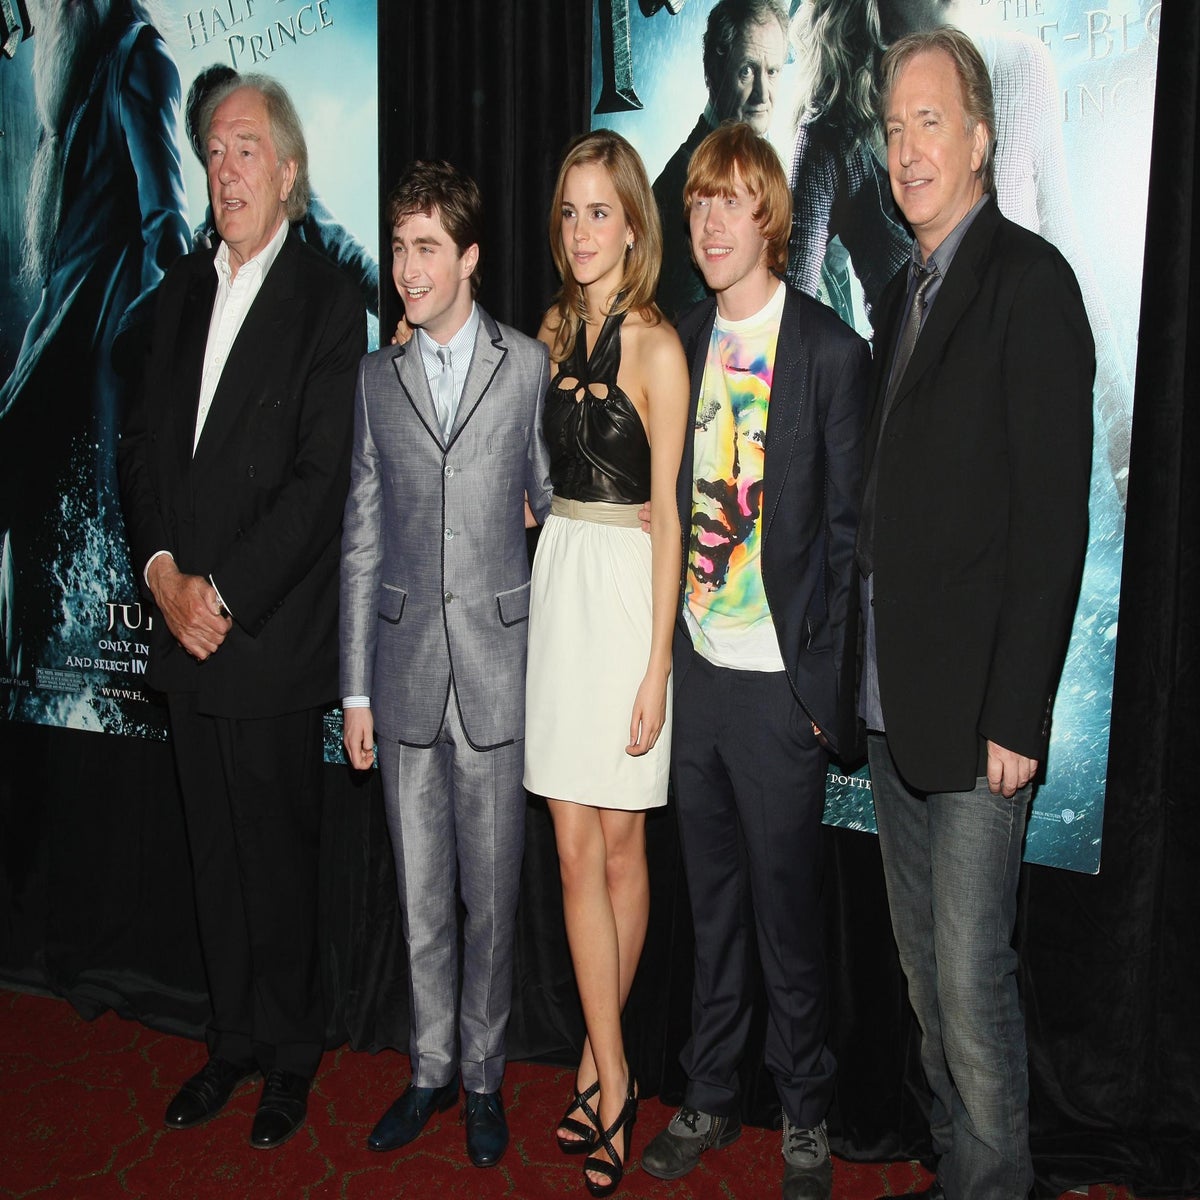 Alan Rickman Criticized Emma Watson's Diction in 'Harry Potter' Films